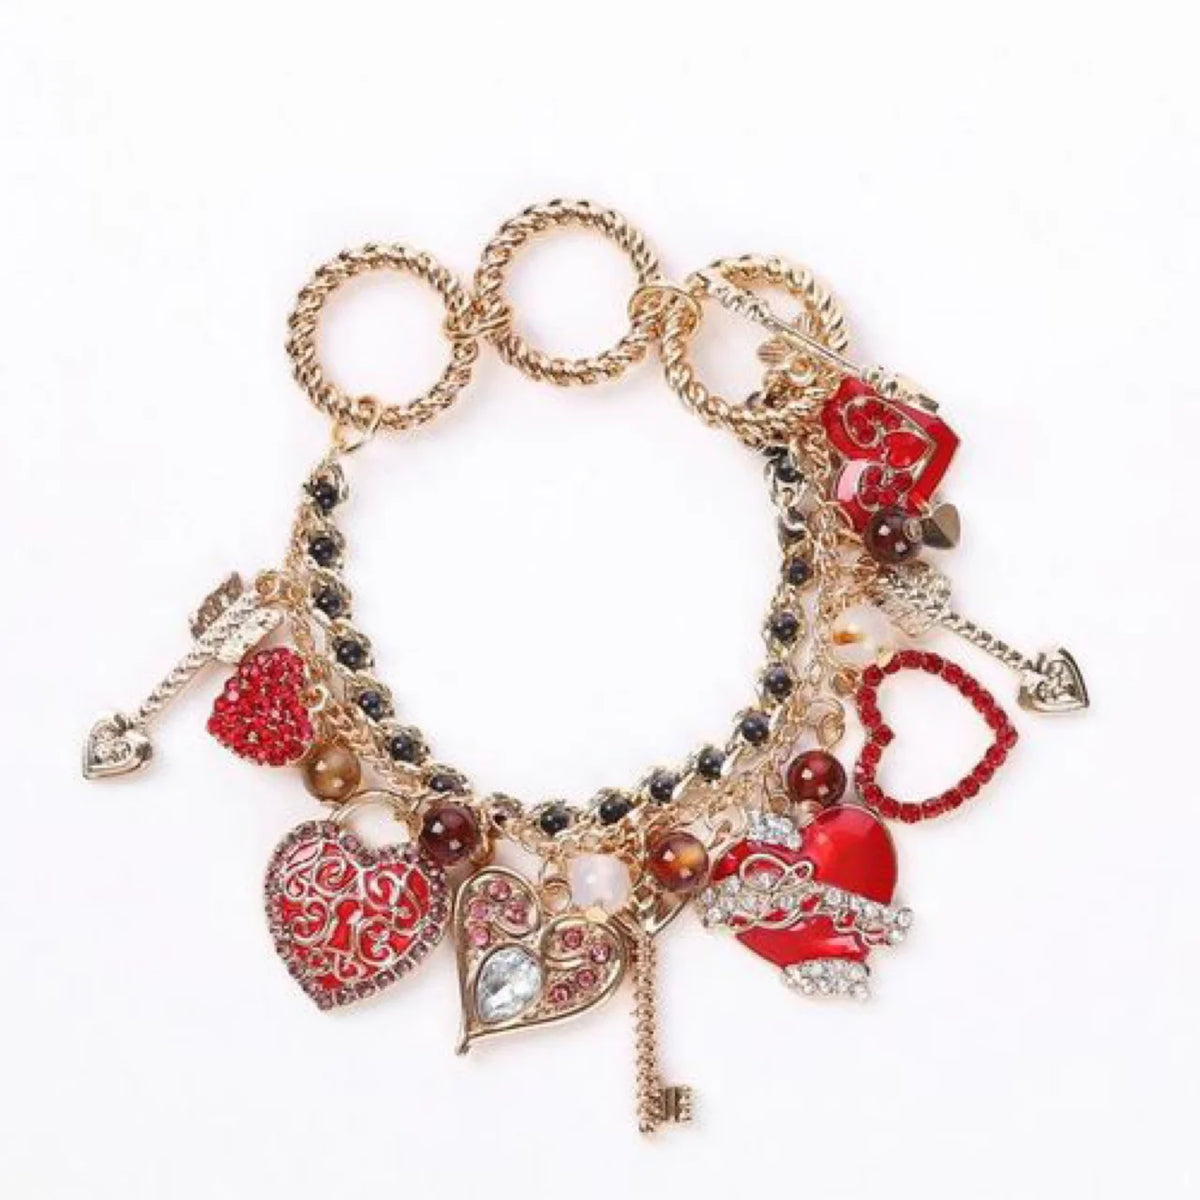 Sweetheart's Love Charm Bracelet